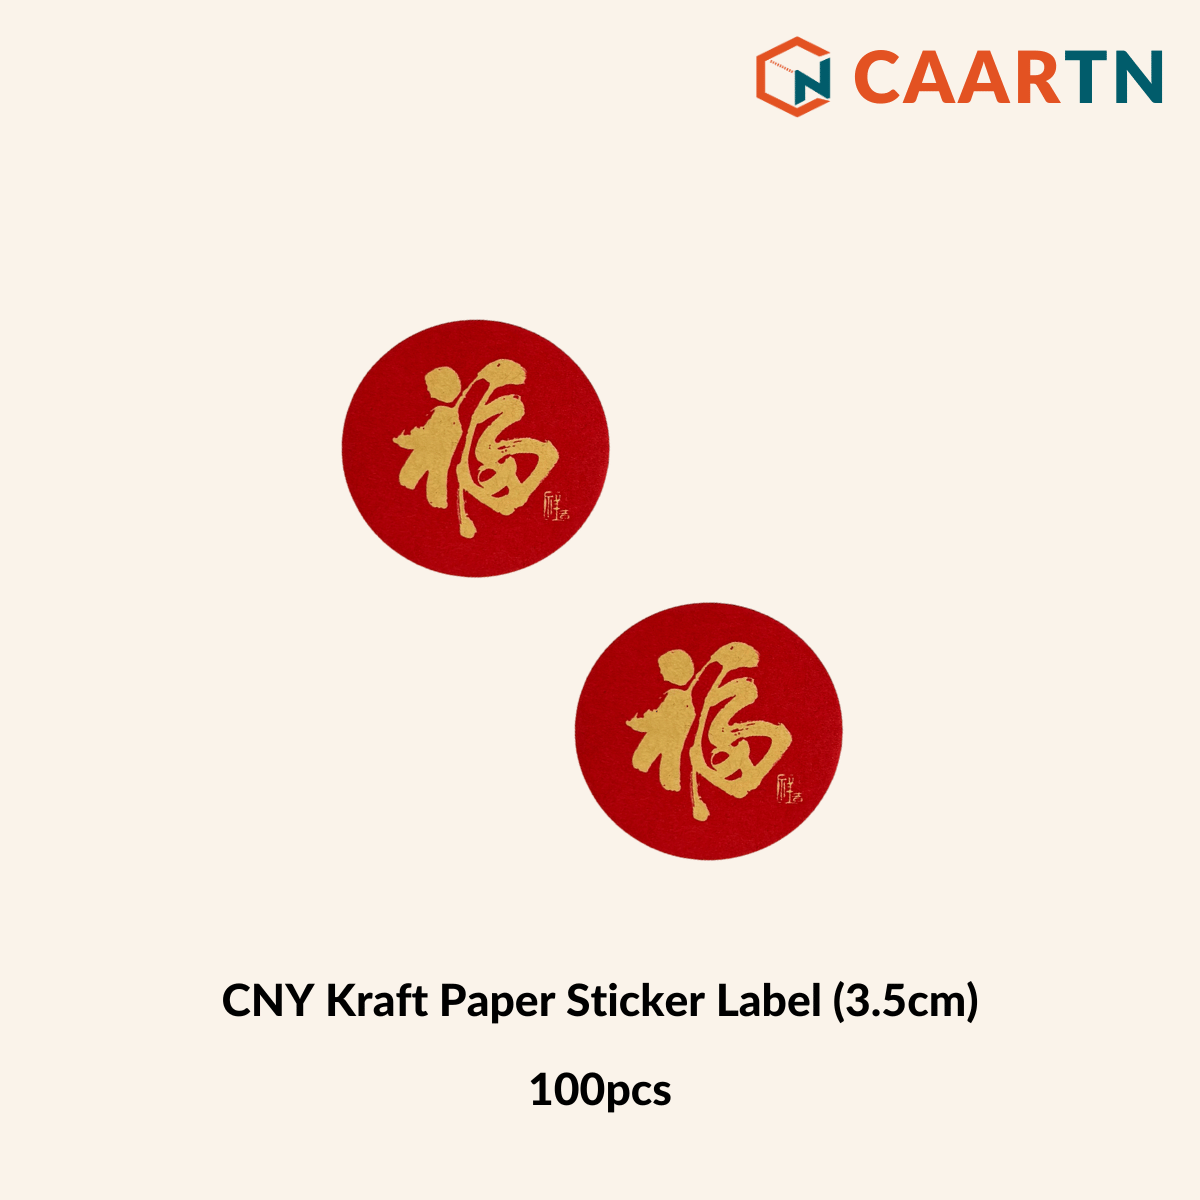 CNY Kraft Paper Sticker Labels